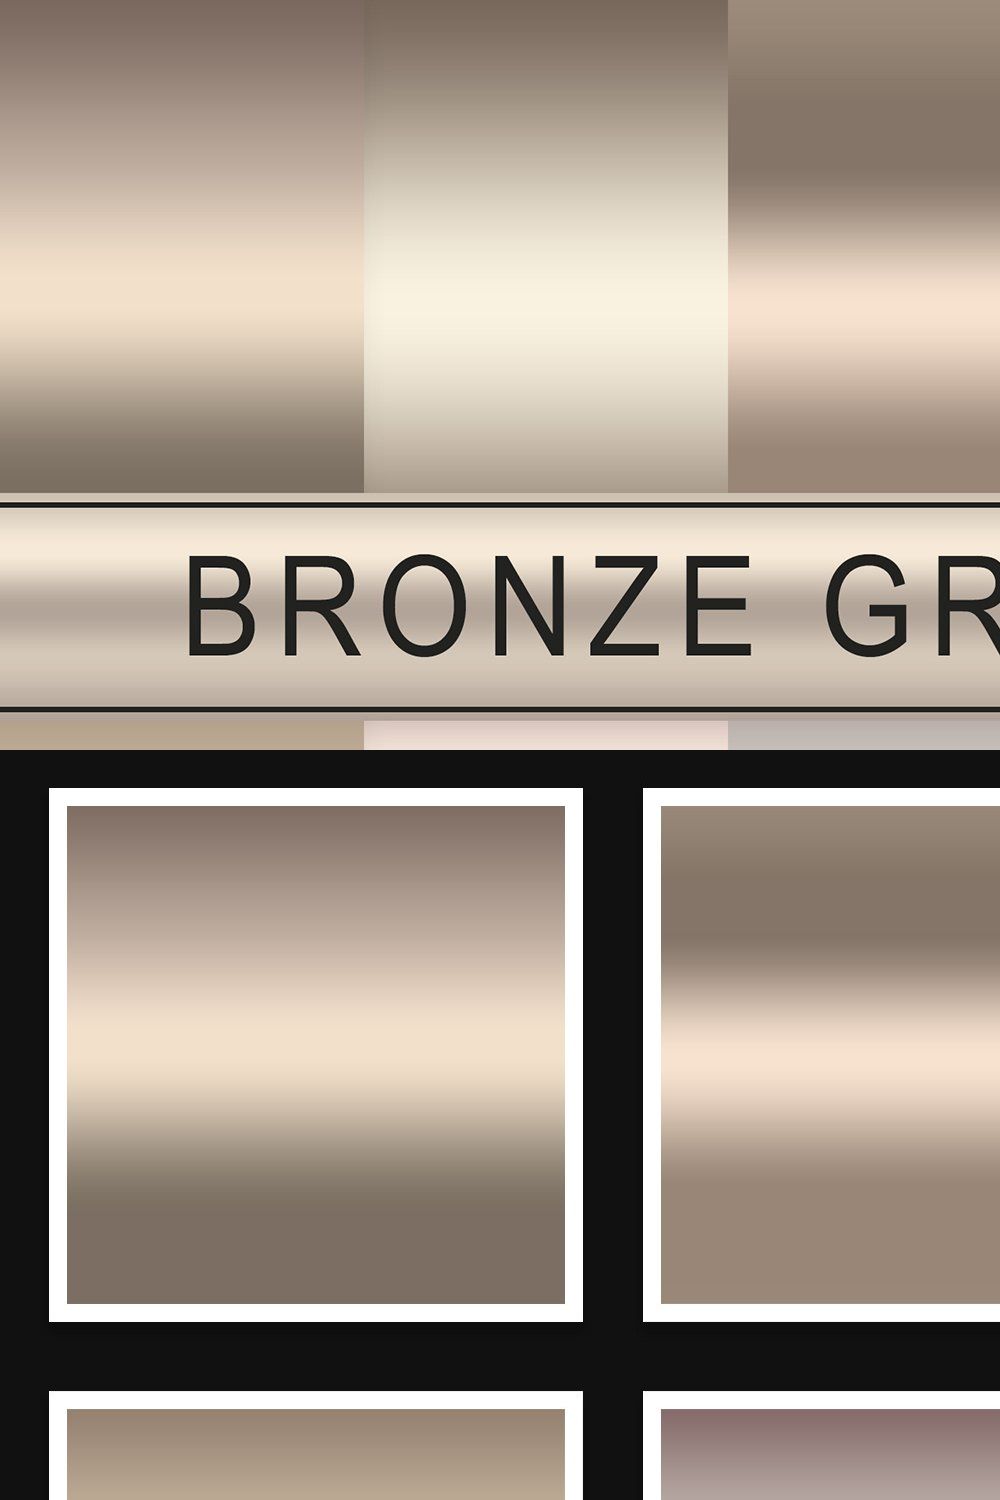 Bronze Gradients pinterest preview image.